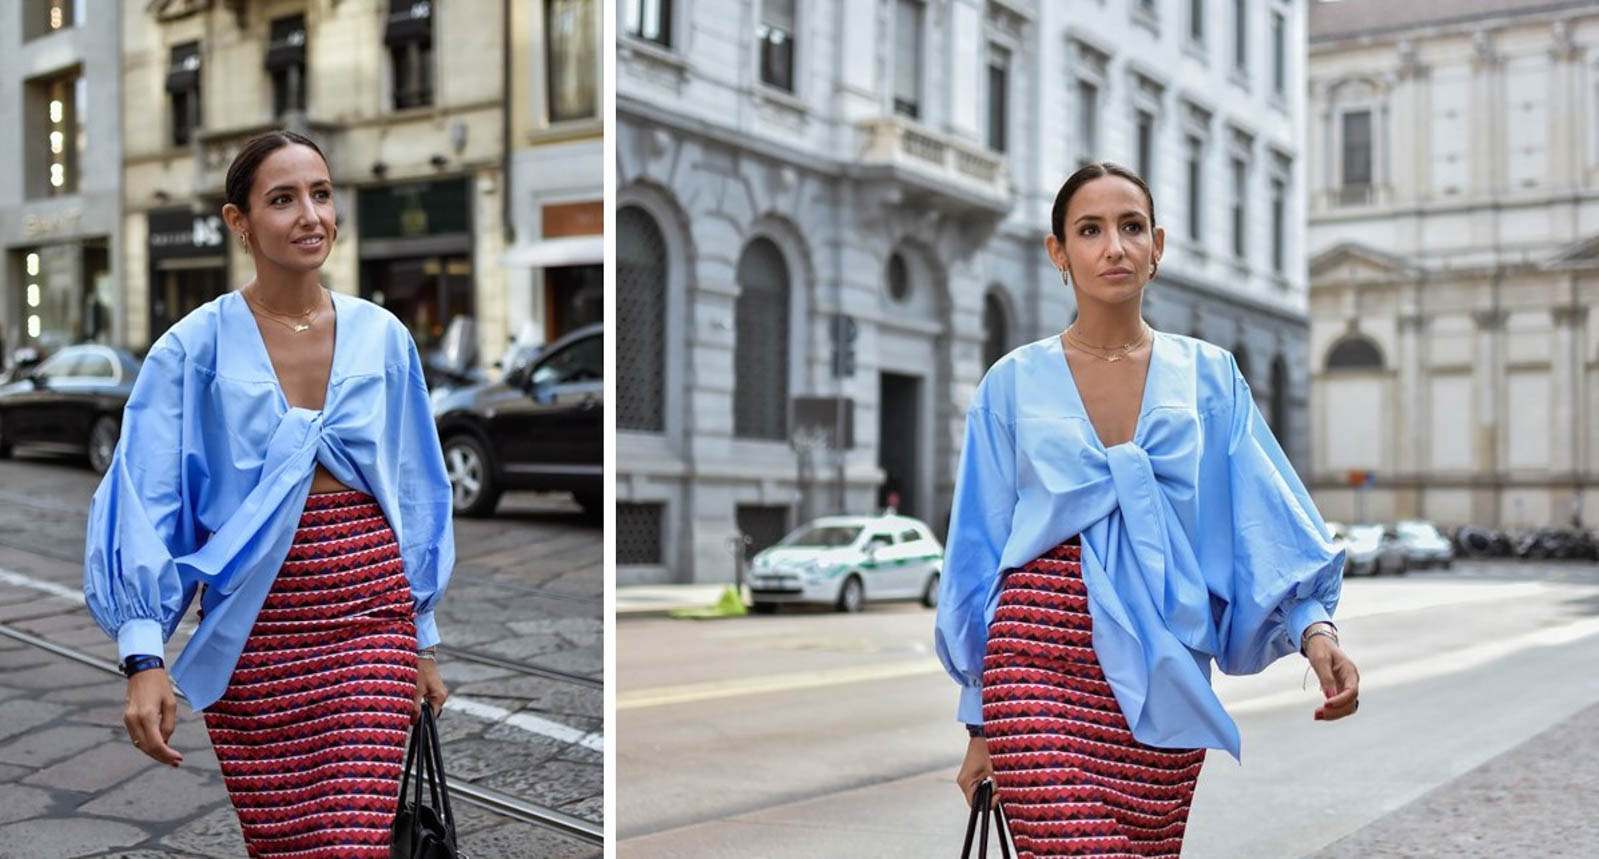 https://www.elblogdesilvia.com/wp-content/uploads/2018/10/el-blog-de-silvia-rodriguez-street-style-madrid-revolve-silver-skirt-h.jpg